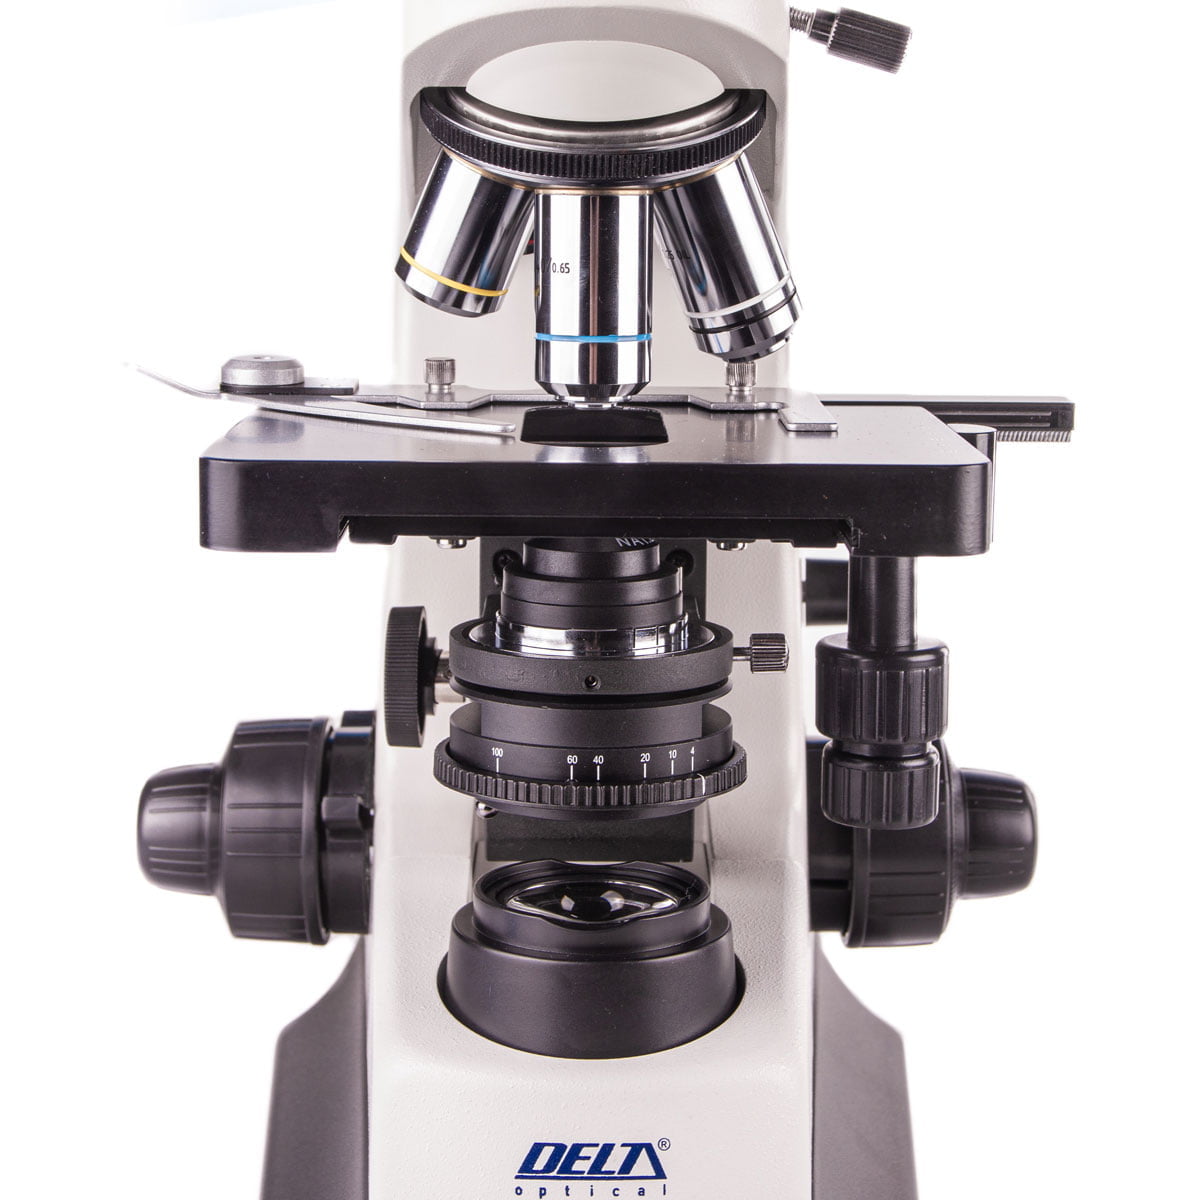 Mikroskop Delta Optical Evolution 100 TRINO